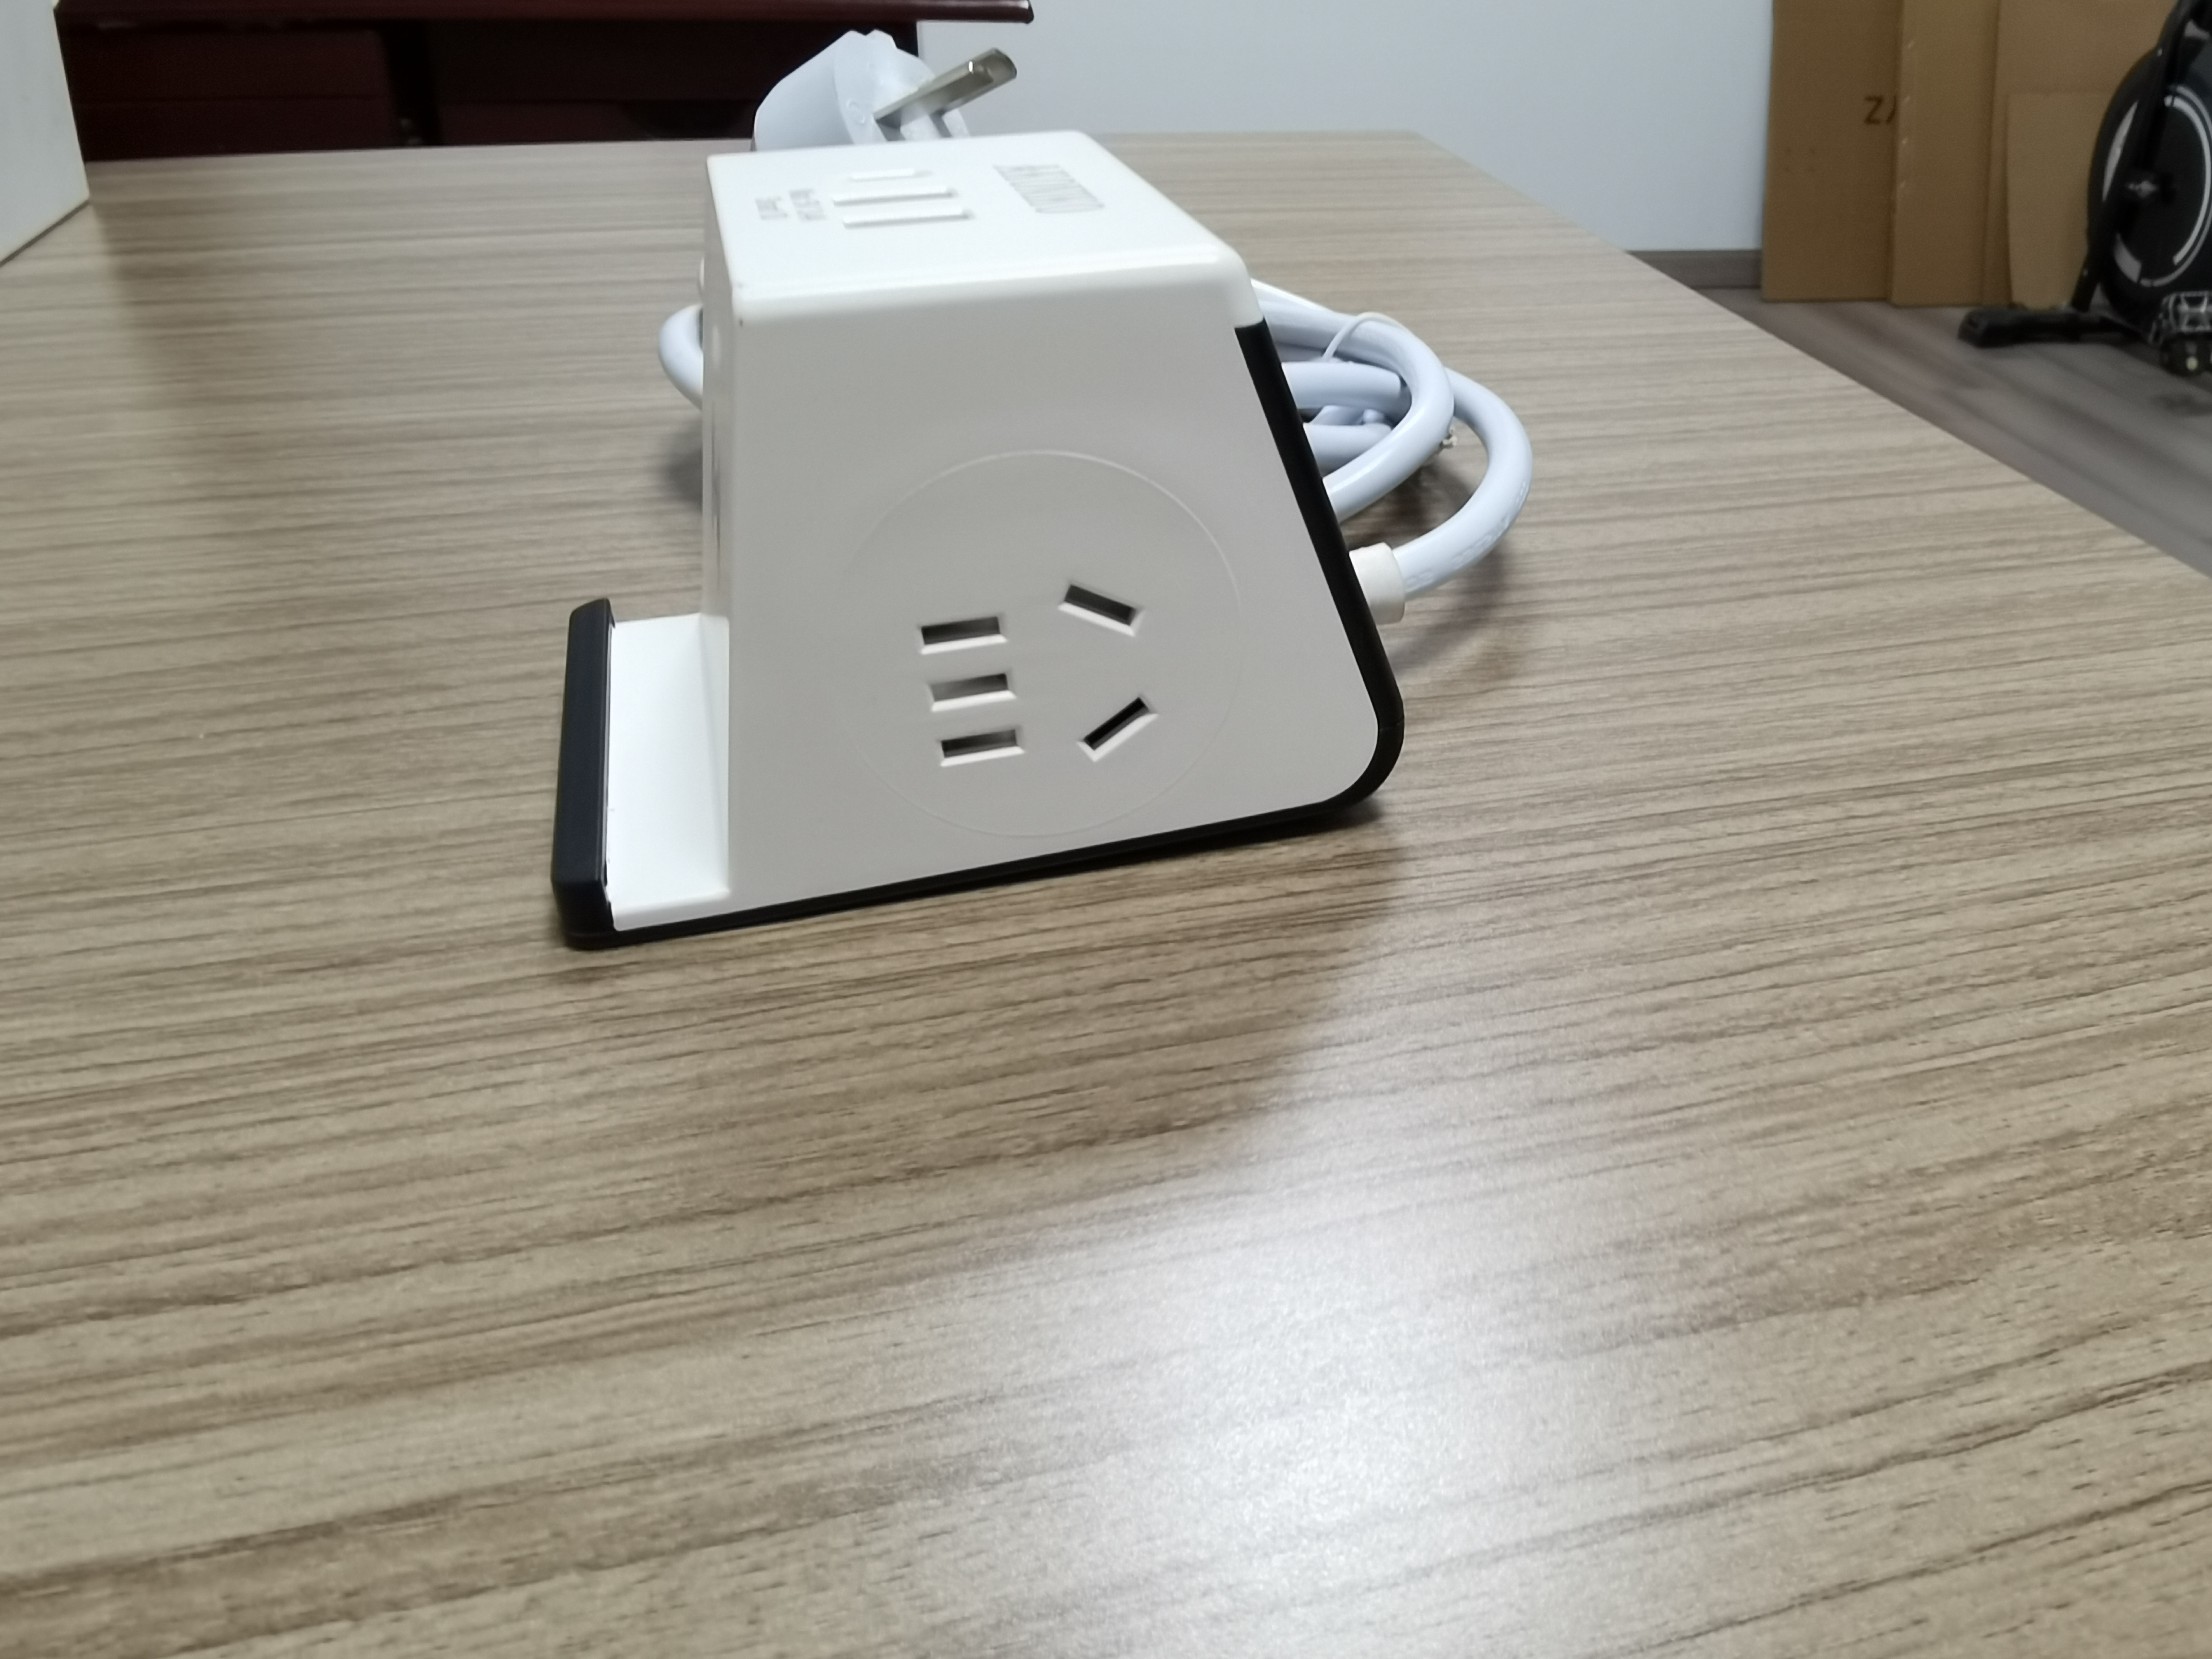 Wireless charging socket